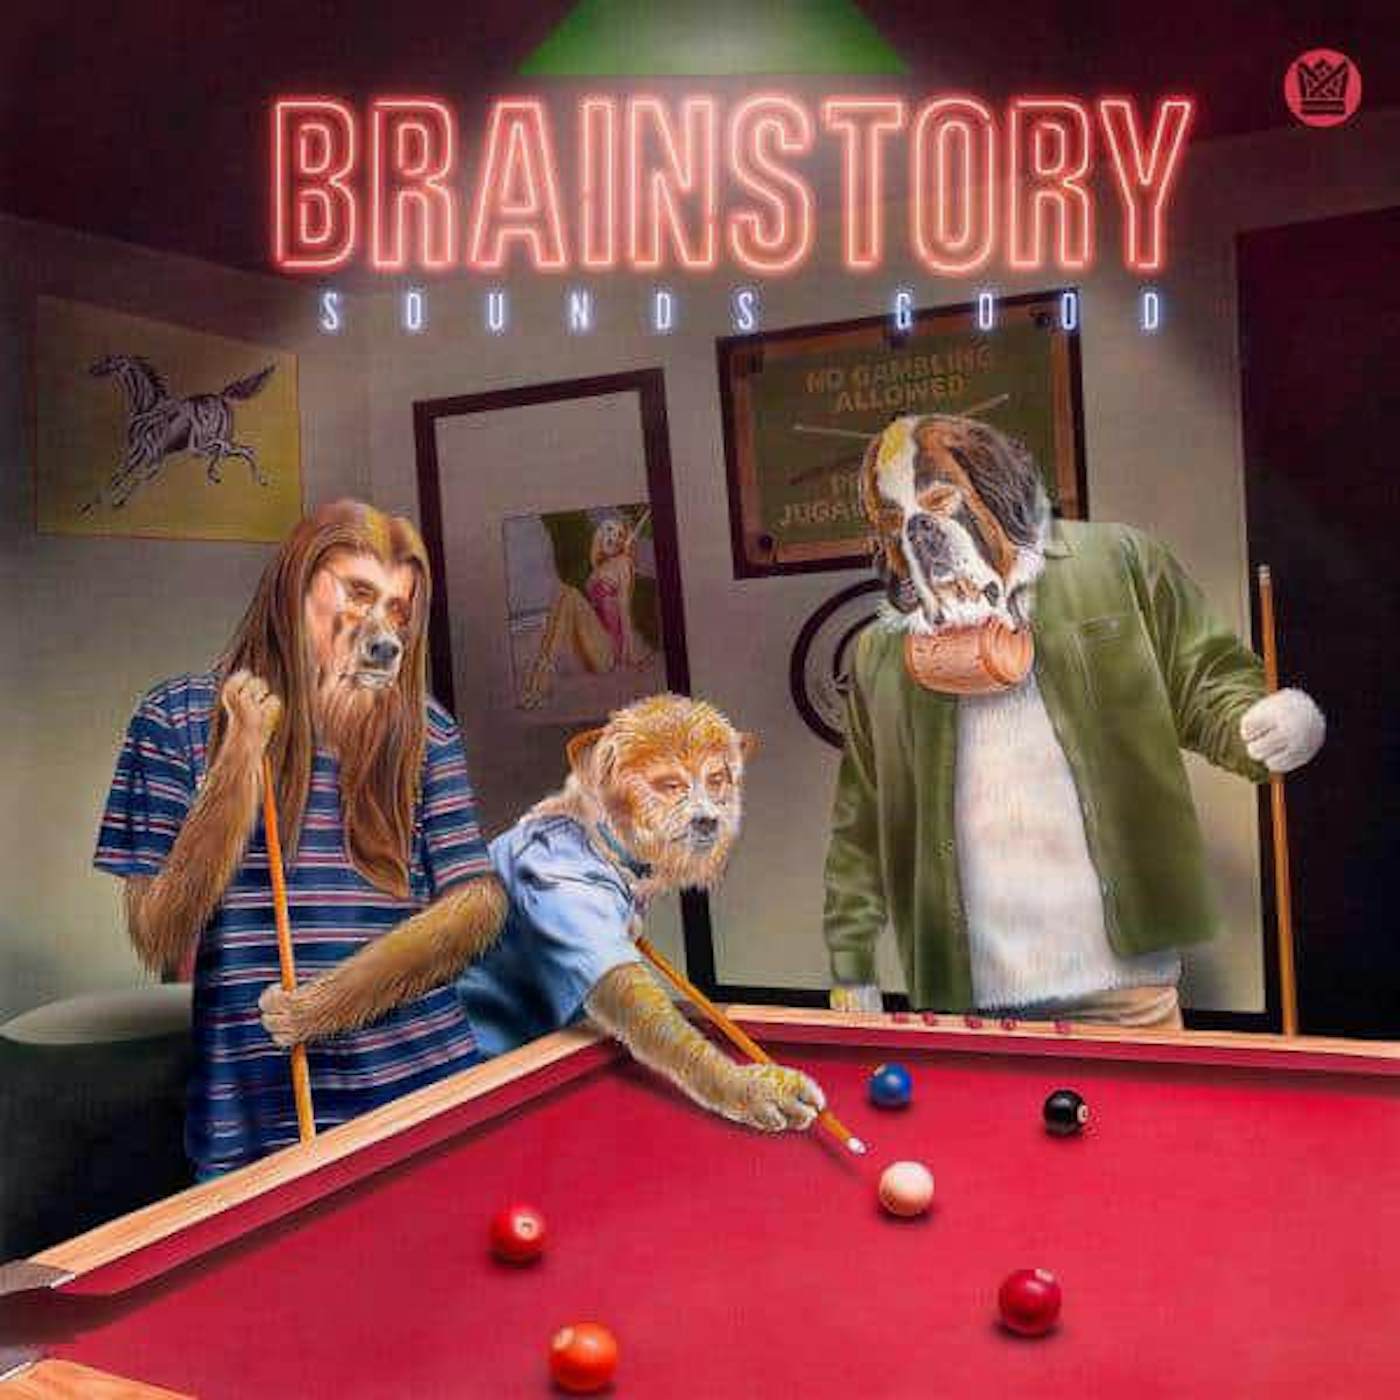 Brainstory Sounds Good Vinyl Record